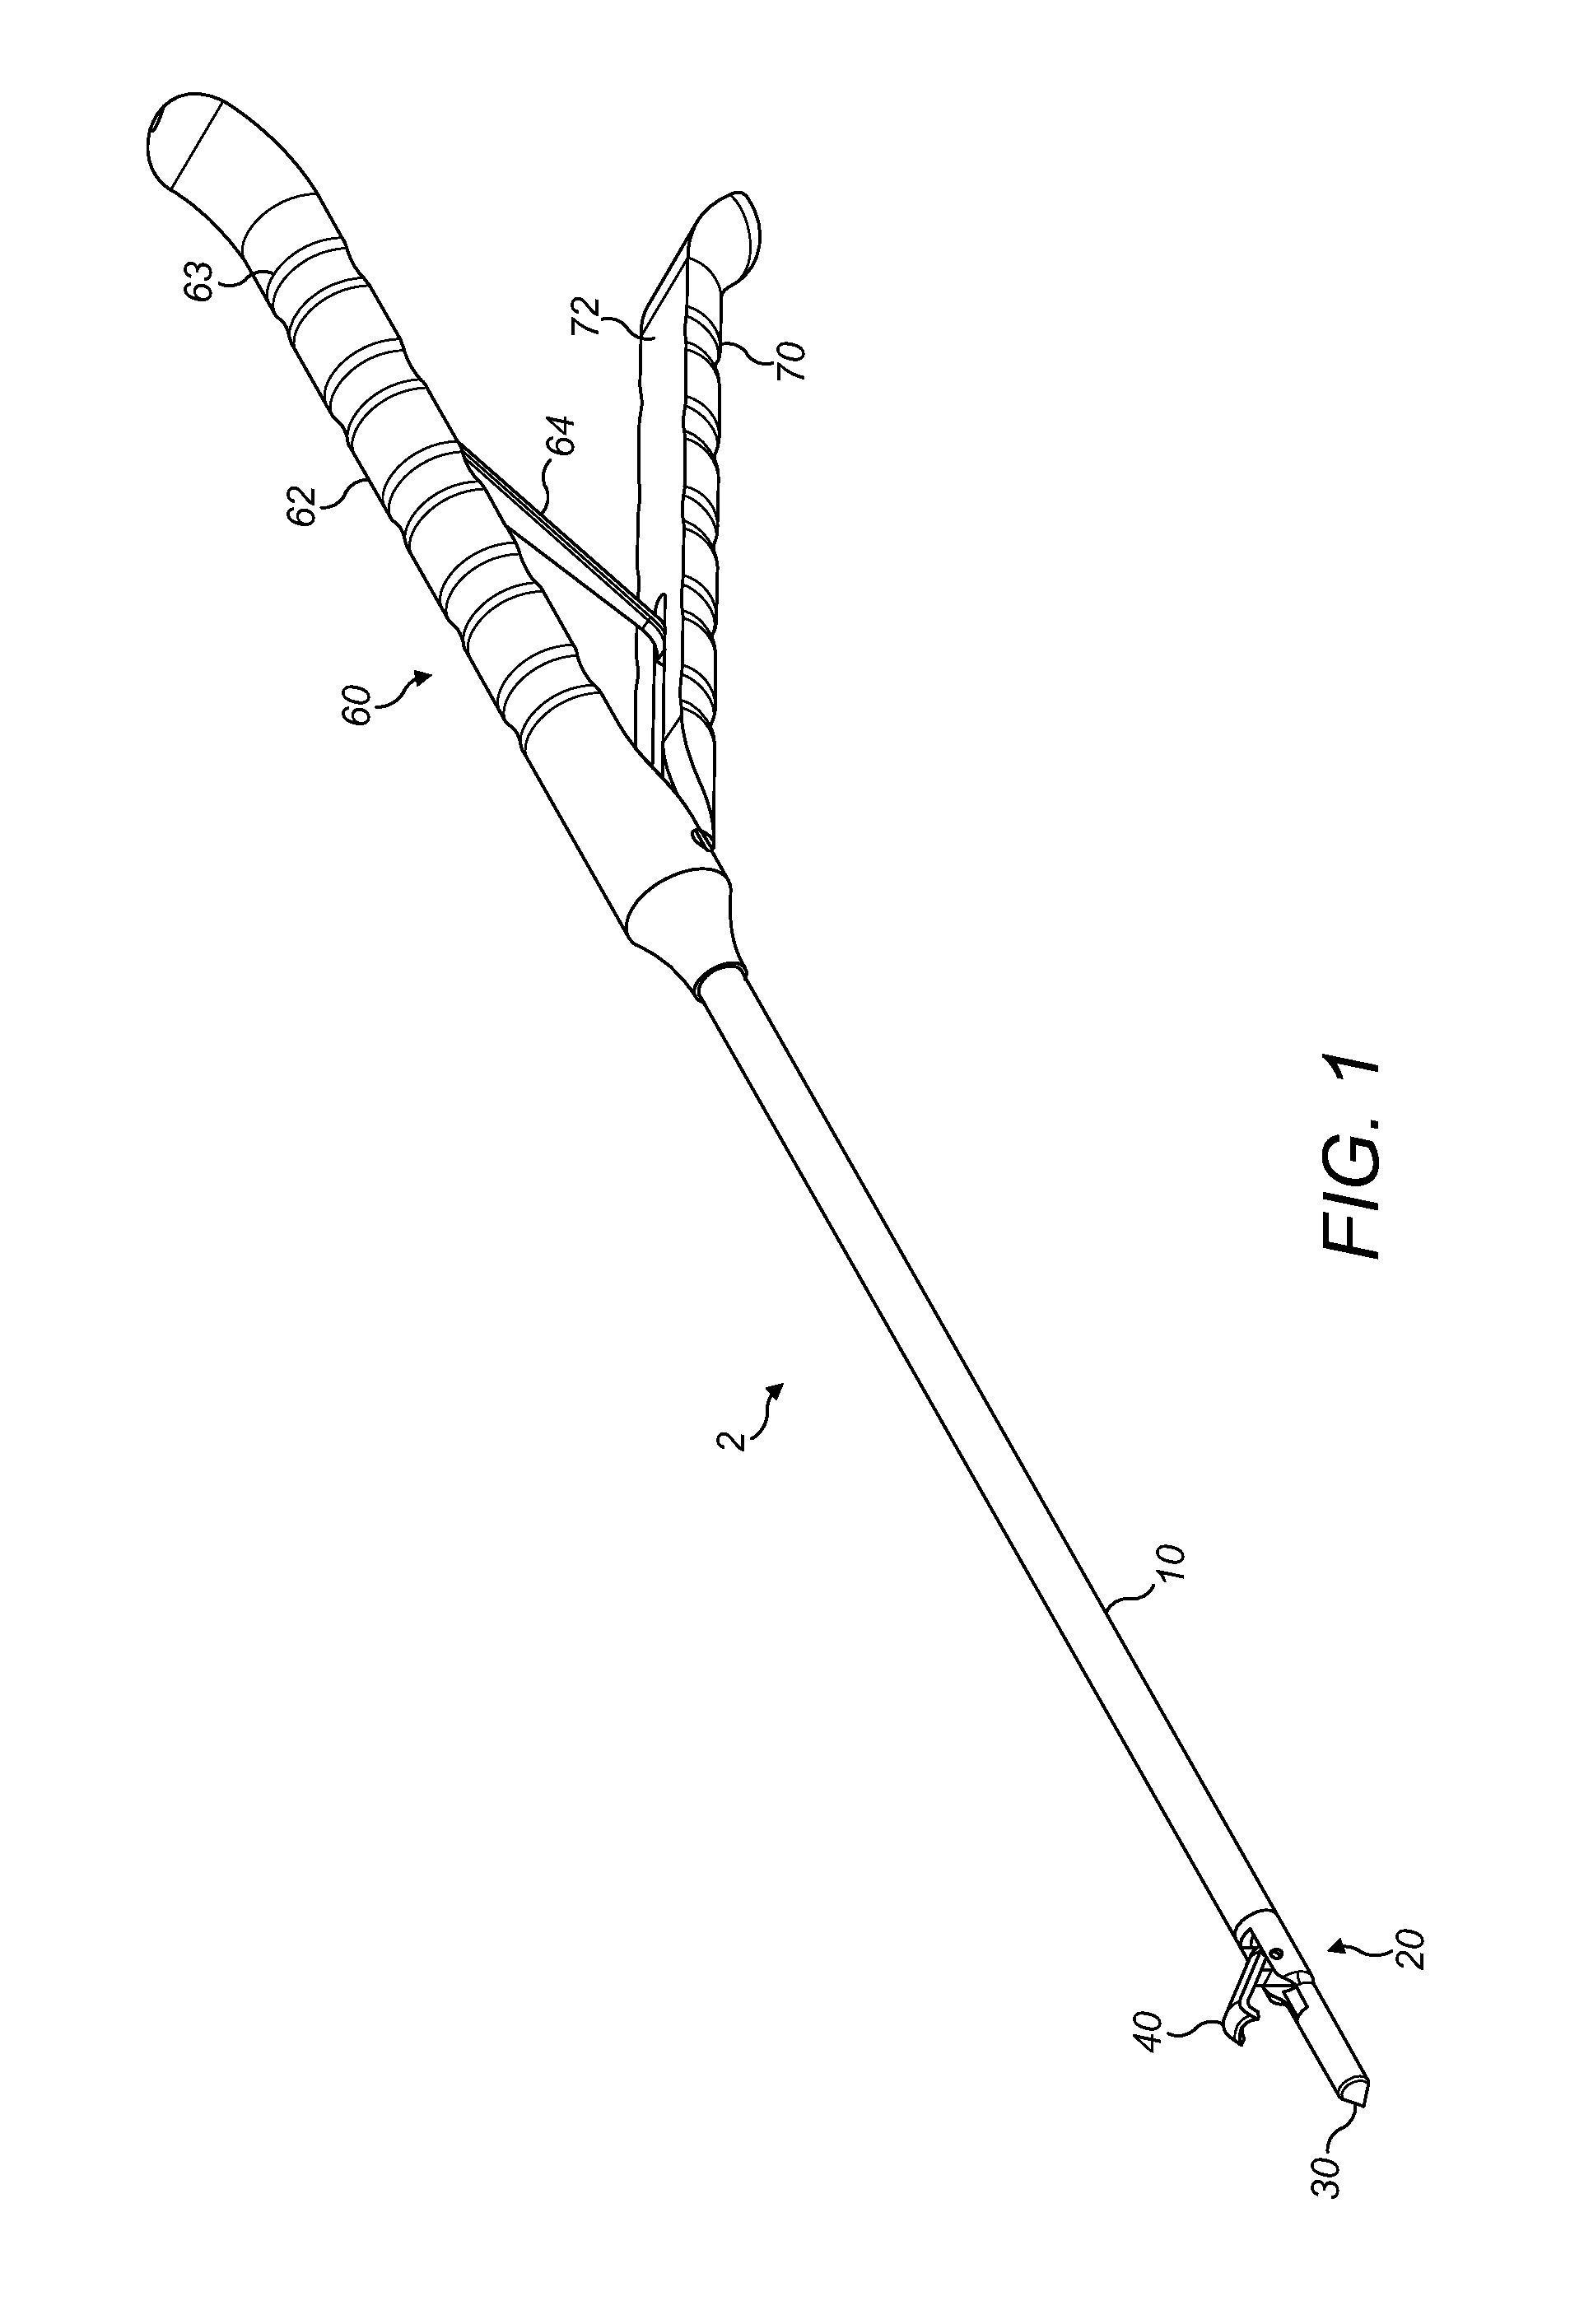 Forceps comprising a trocar tip